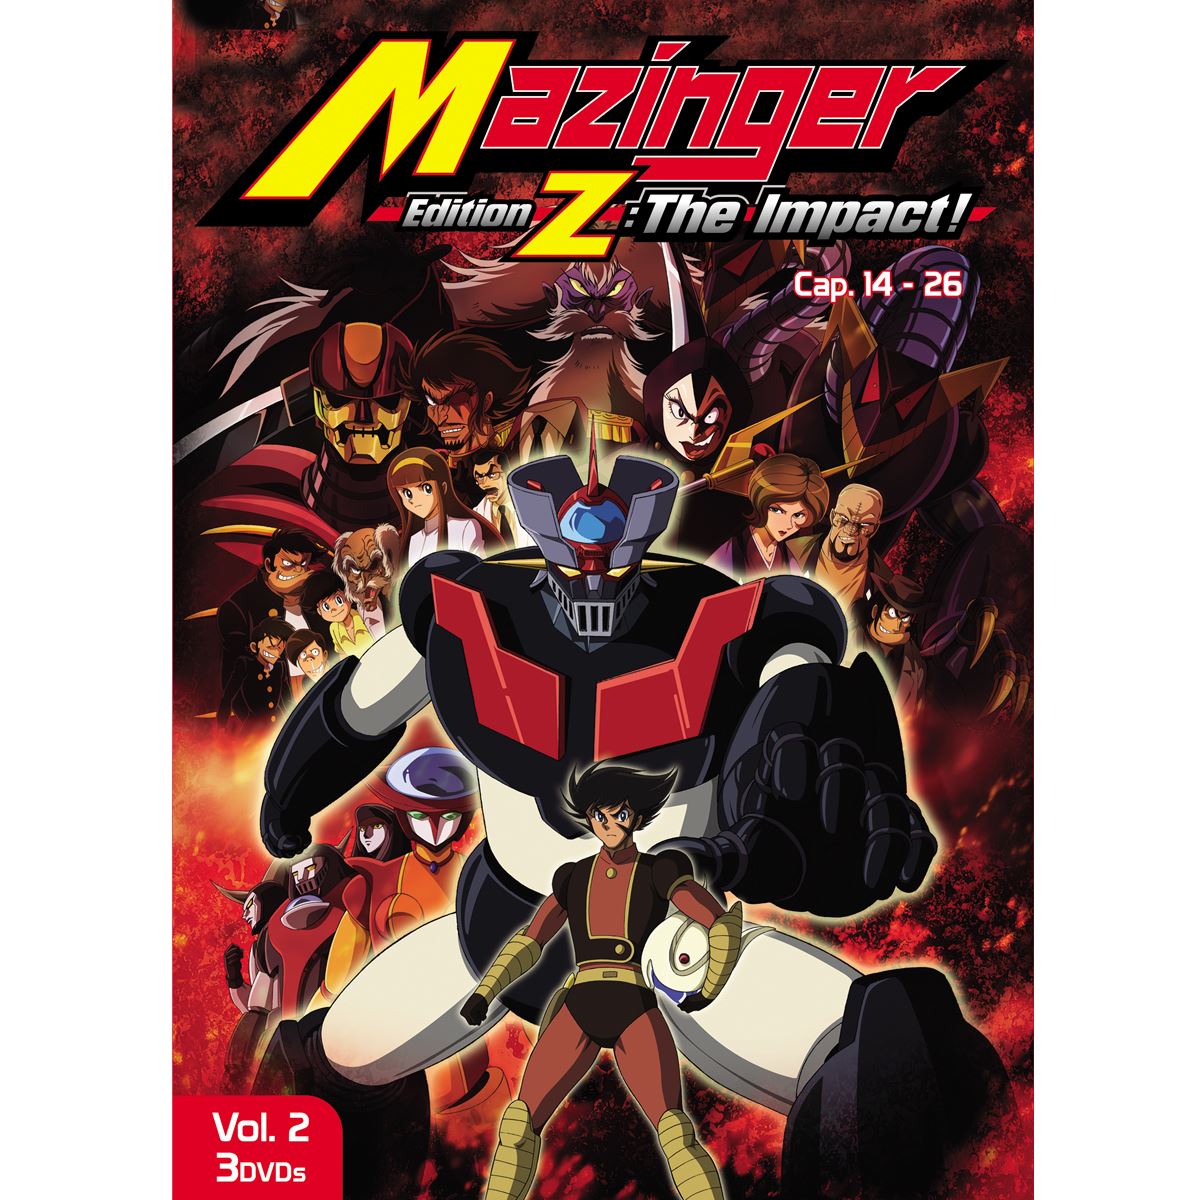 DVD Mazinger Z Edition The Impack Vol. 1